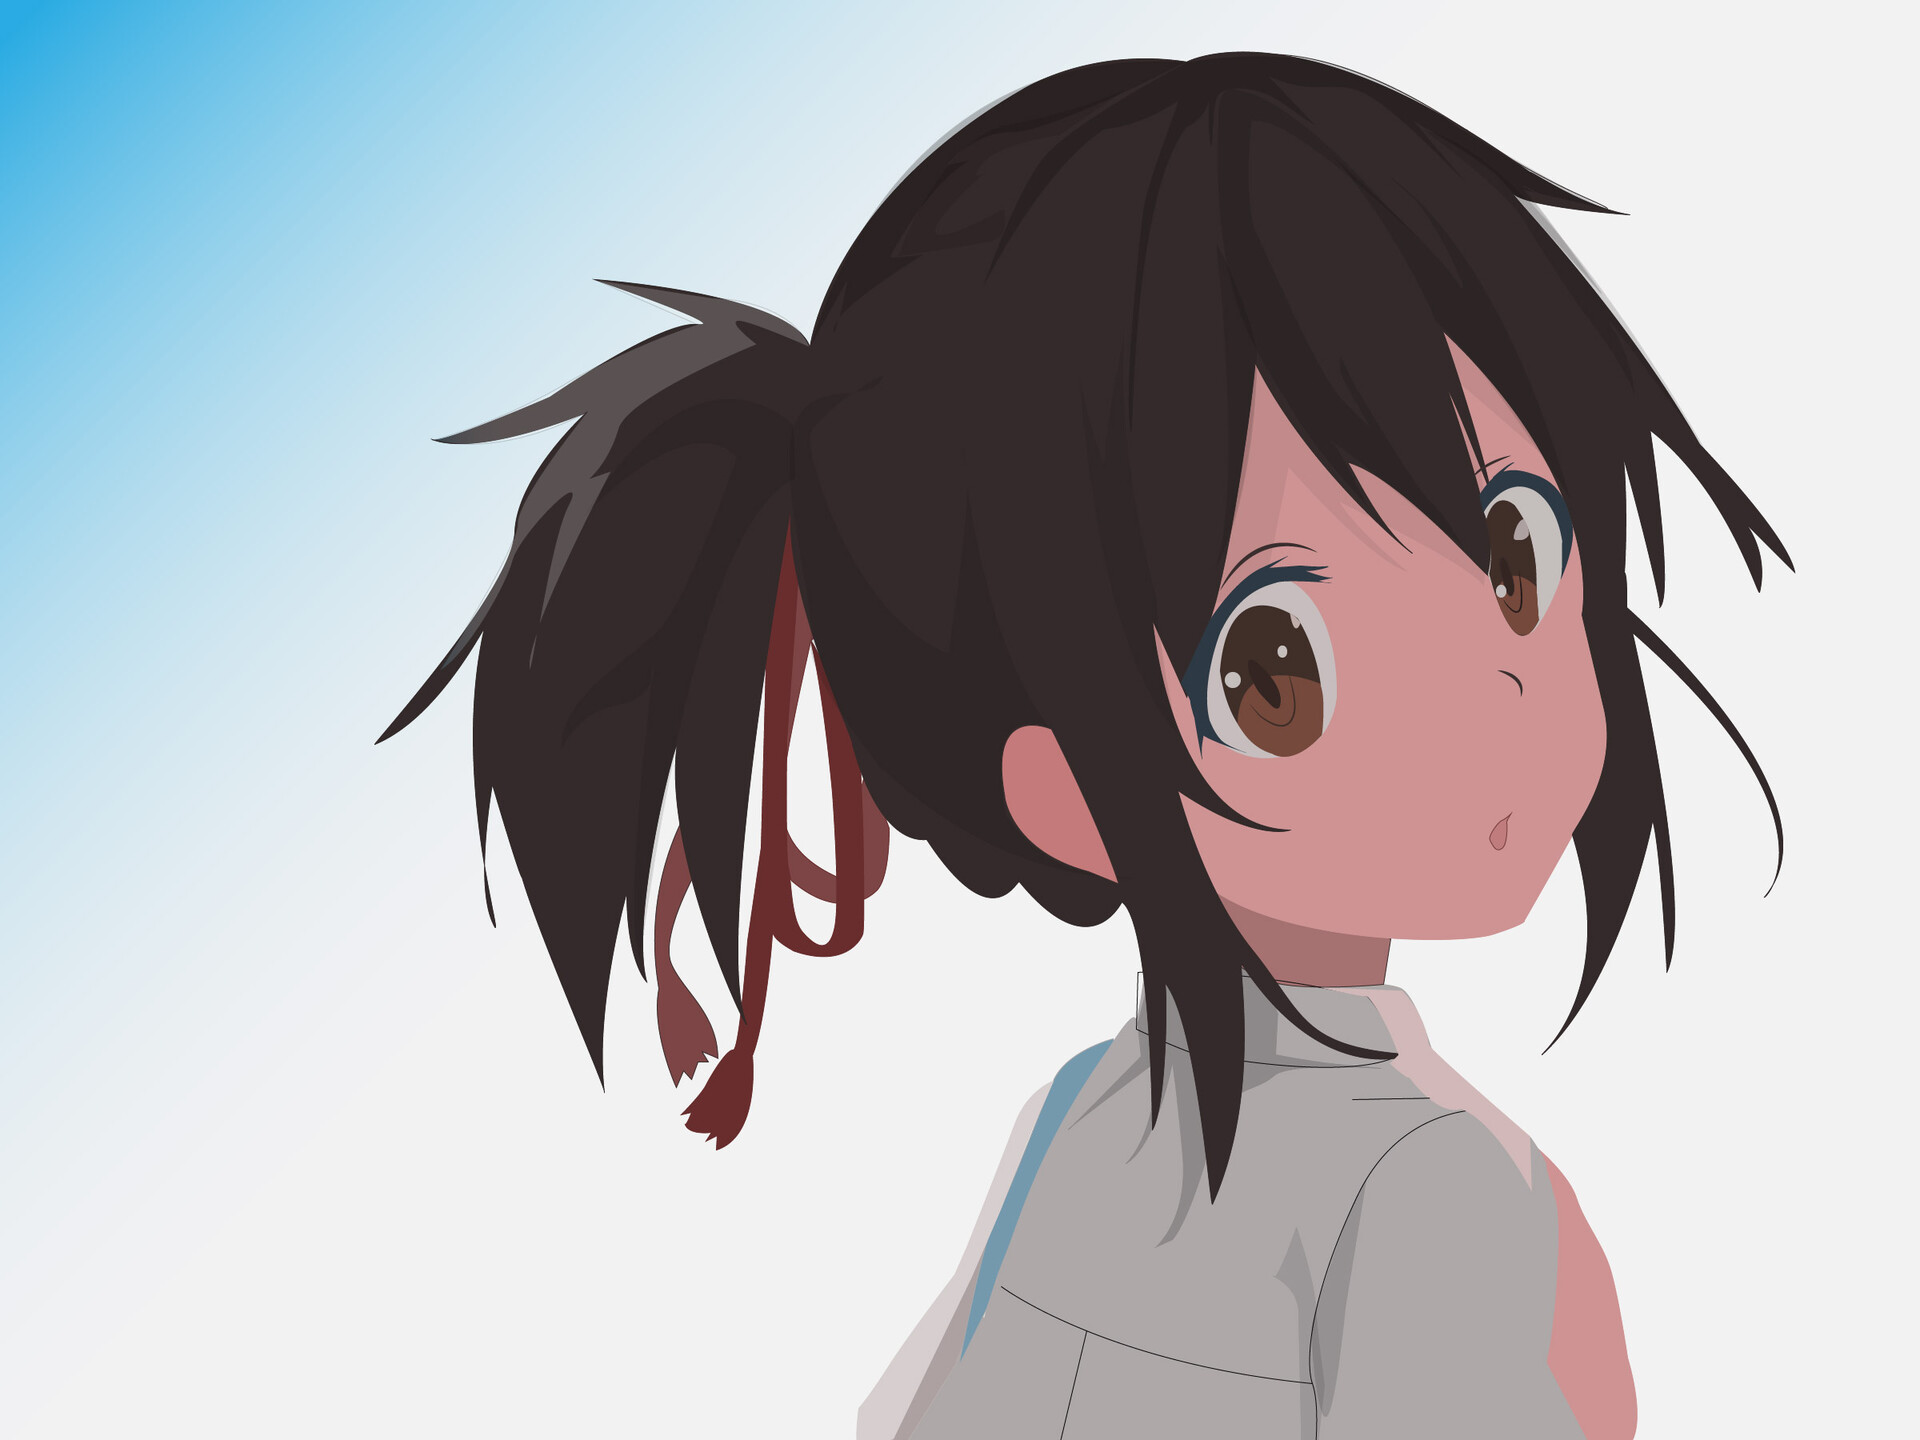 ArtStation - anime character illustration -mitsuha from your name